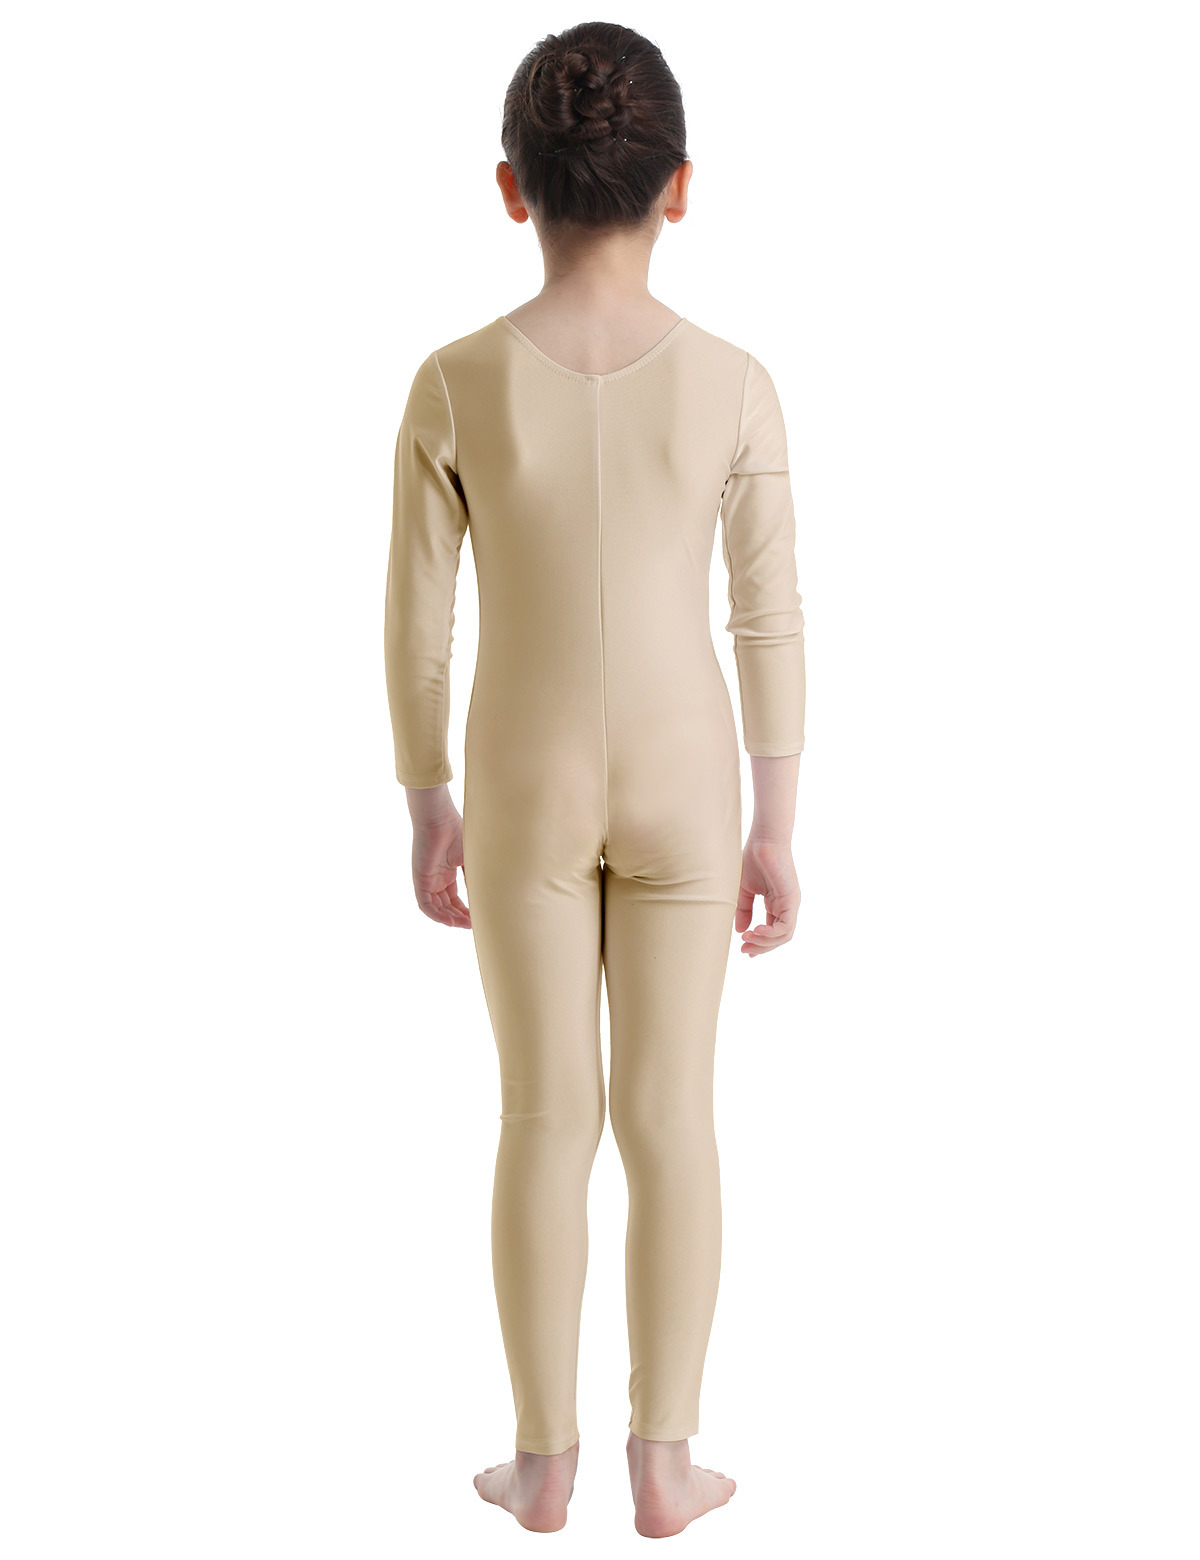 DPOIS Kids Girls Long Sleeve Unitard Leotard Jumpsuit Full Length Bodysuit Nude 11-12 - image 3 of 7